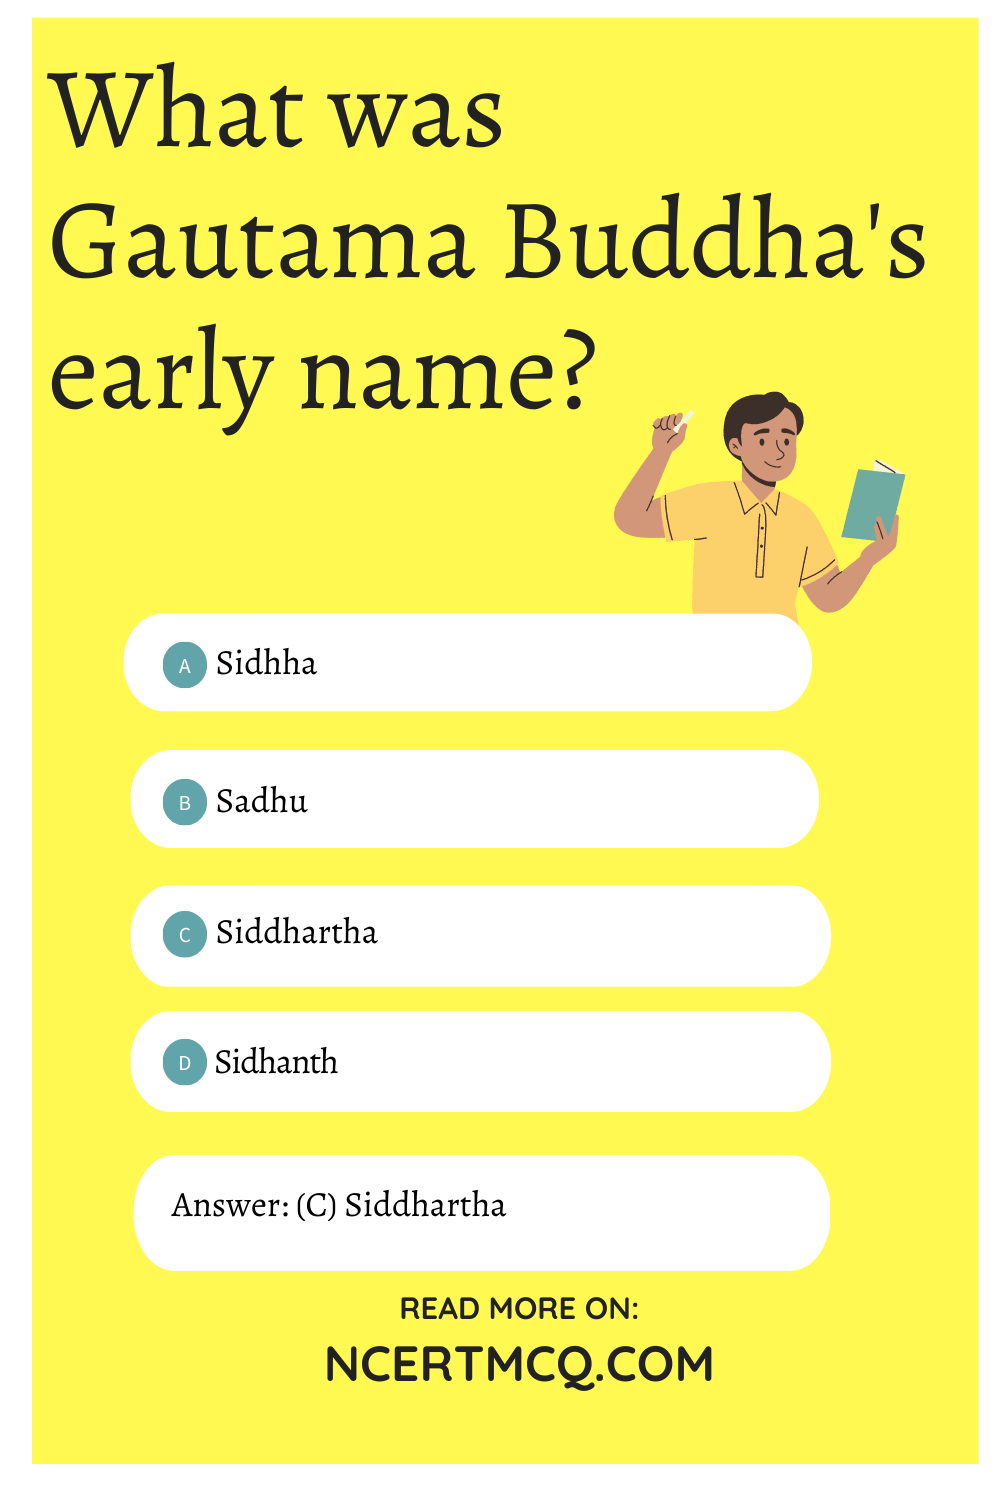 What was Gautama Buddha's early name?